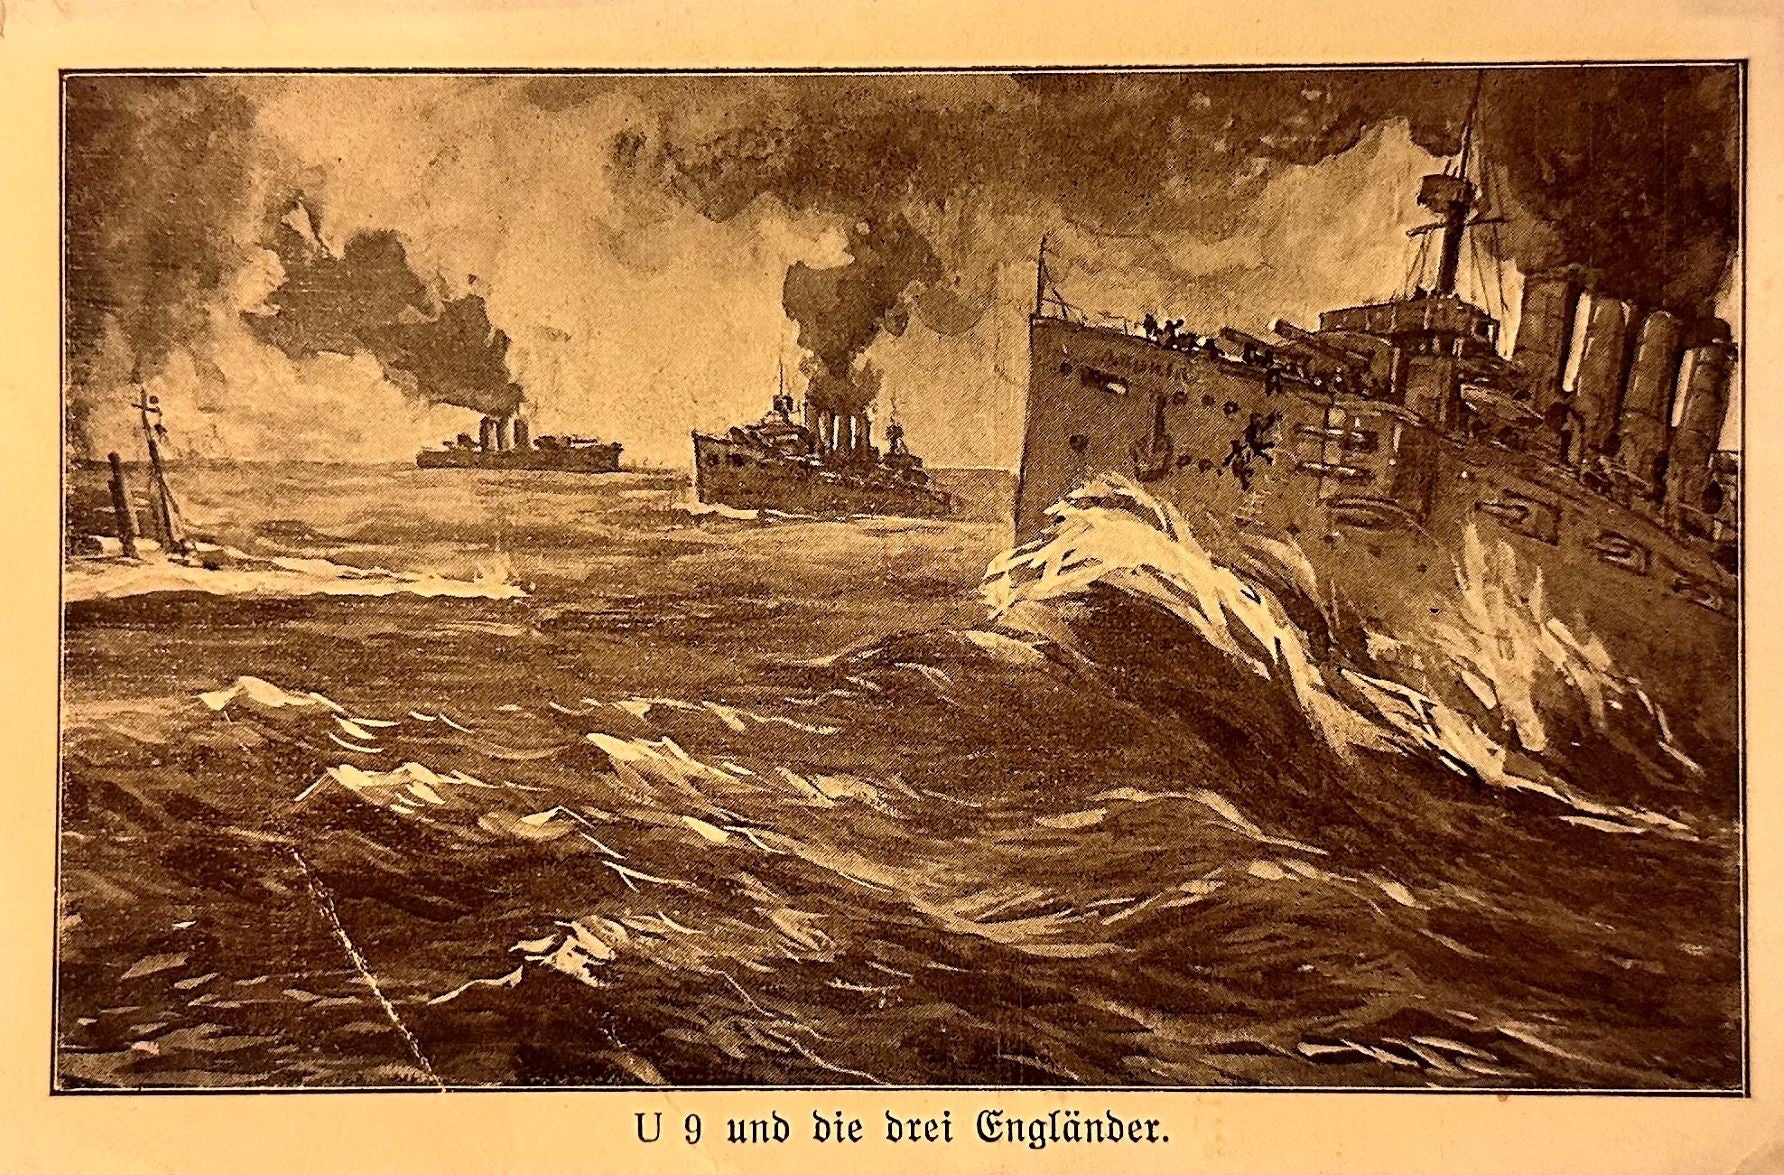 Germany Navy Post Card of Otto Weddigen - Derrittmeister Militaria Group